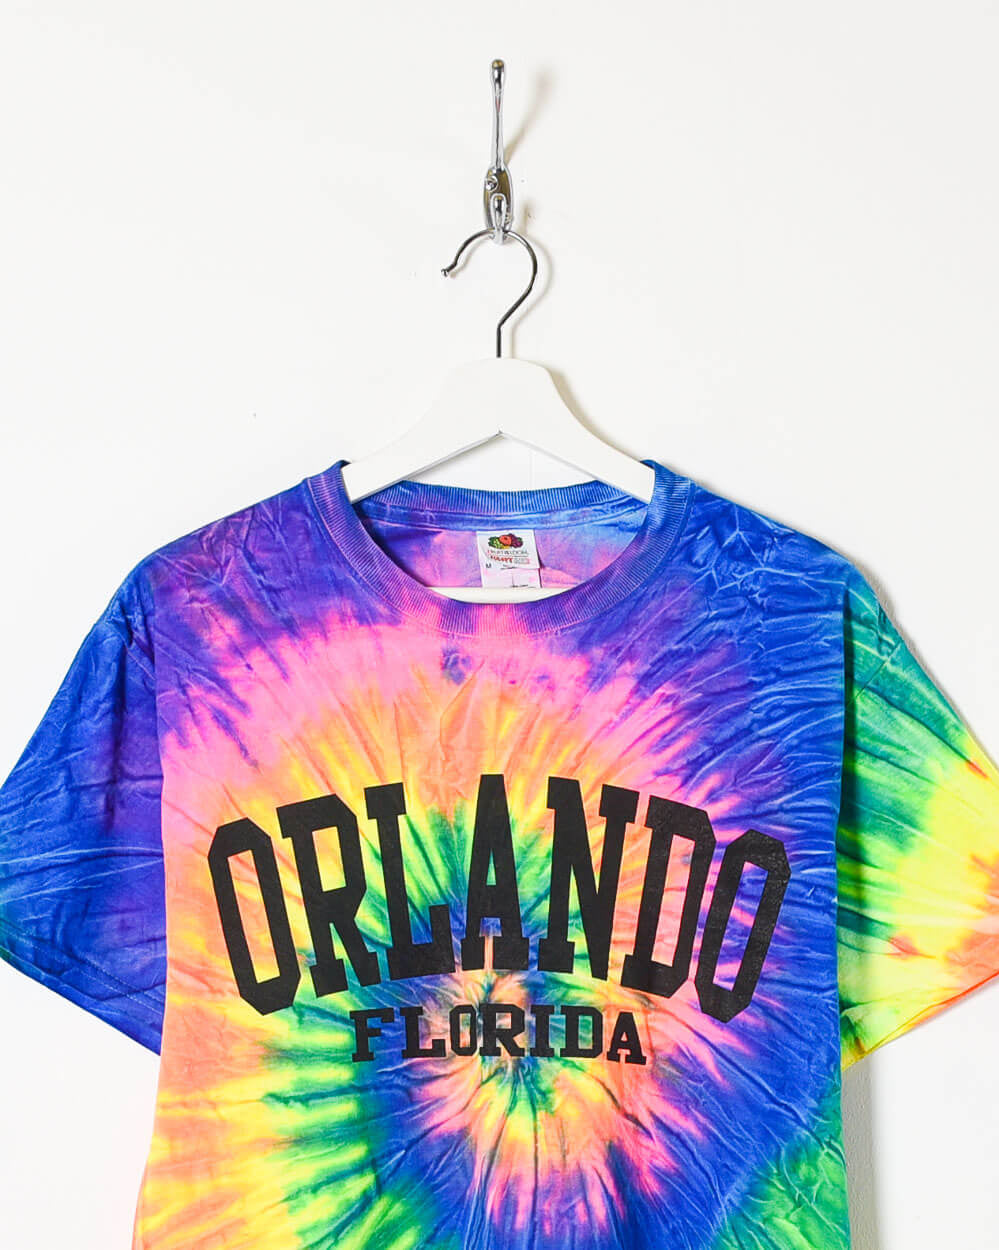 Multi Orlando Florida Tie Dye T-Shirt - Medium